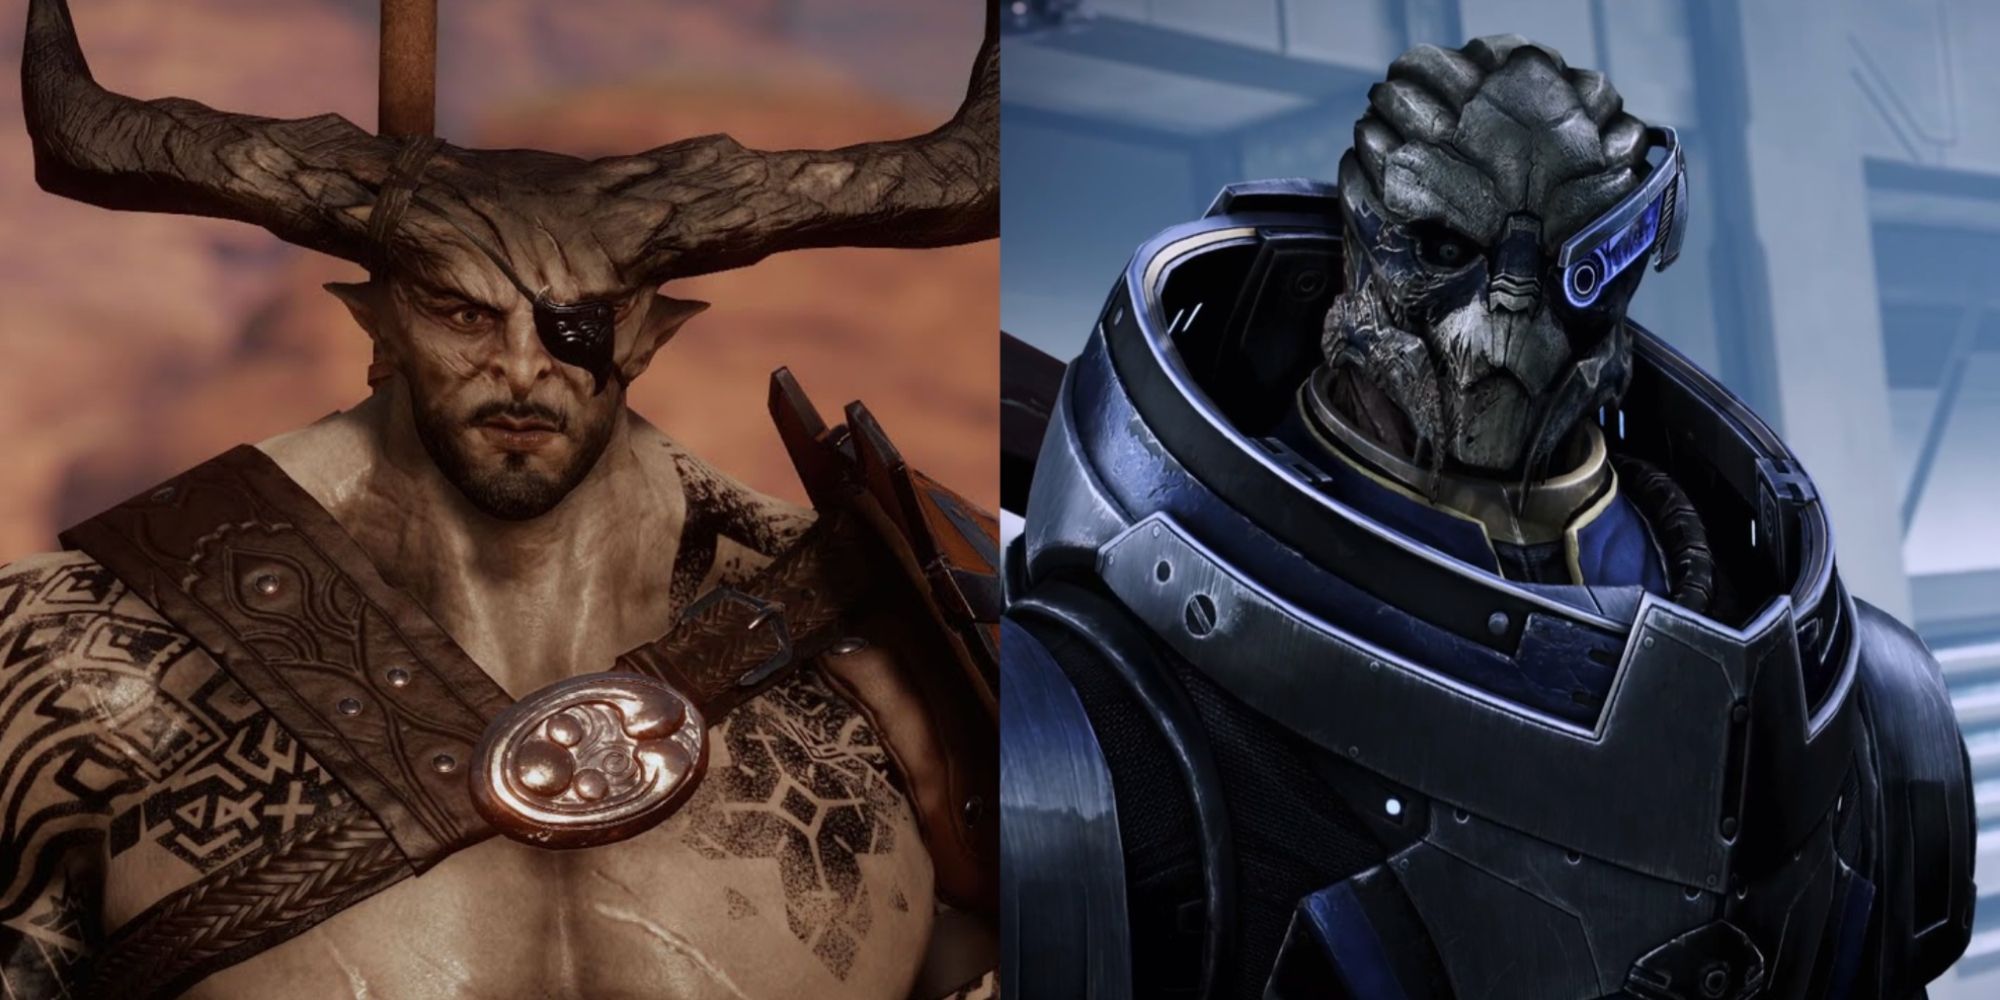 Dragon Age Vs Mass Effect Romance Featured Split Image Of Iron Bull and Garrus